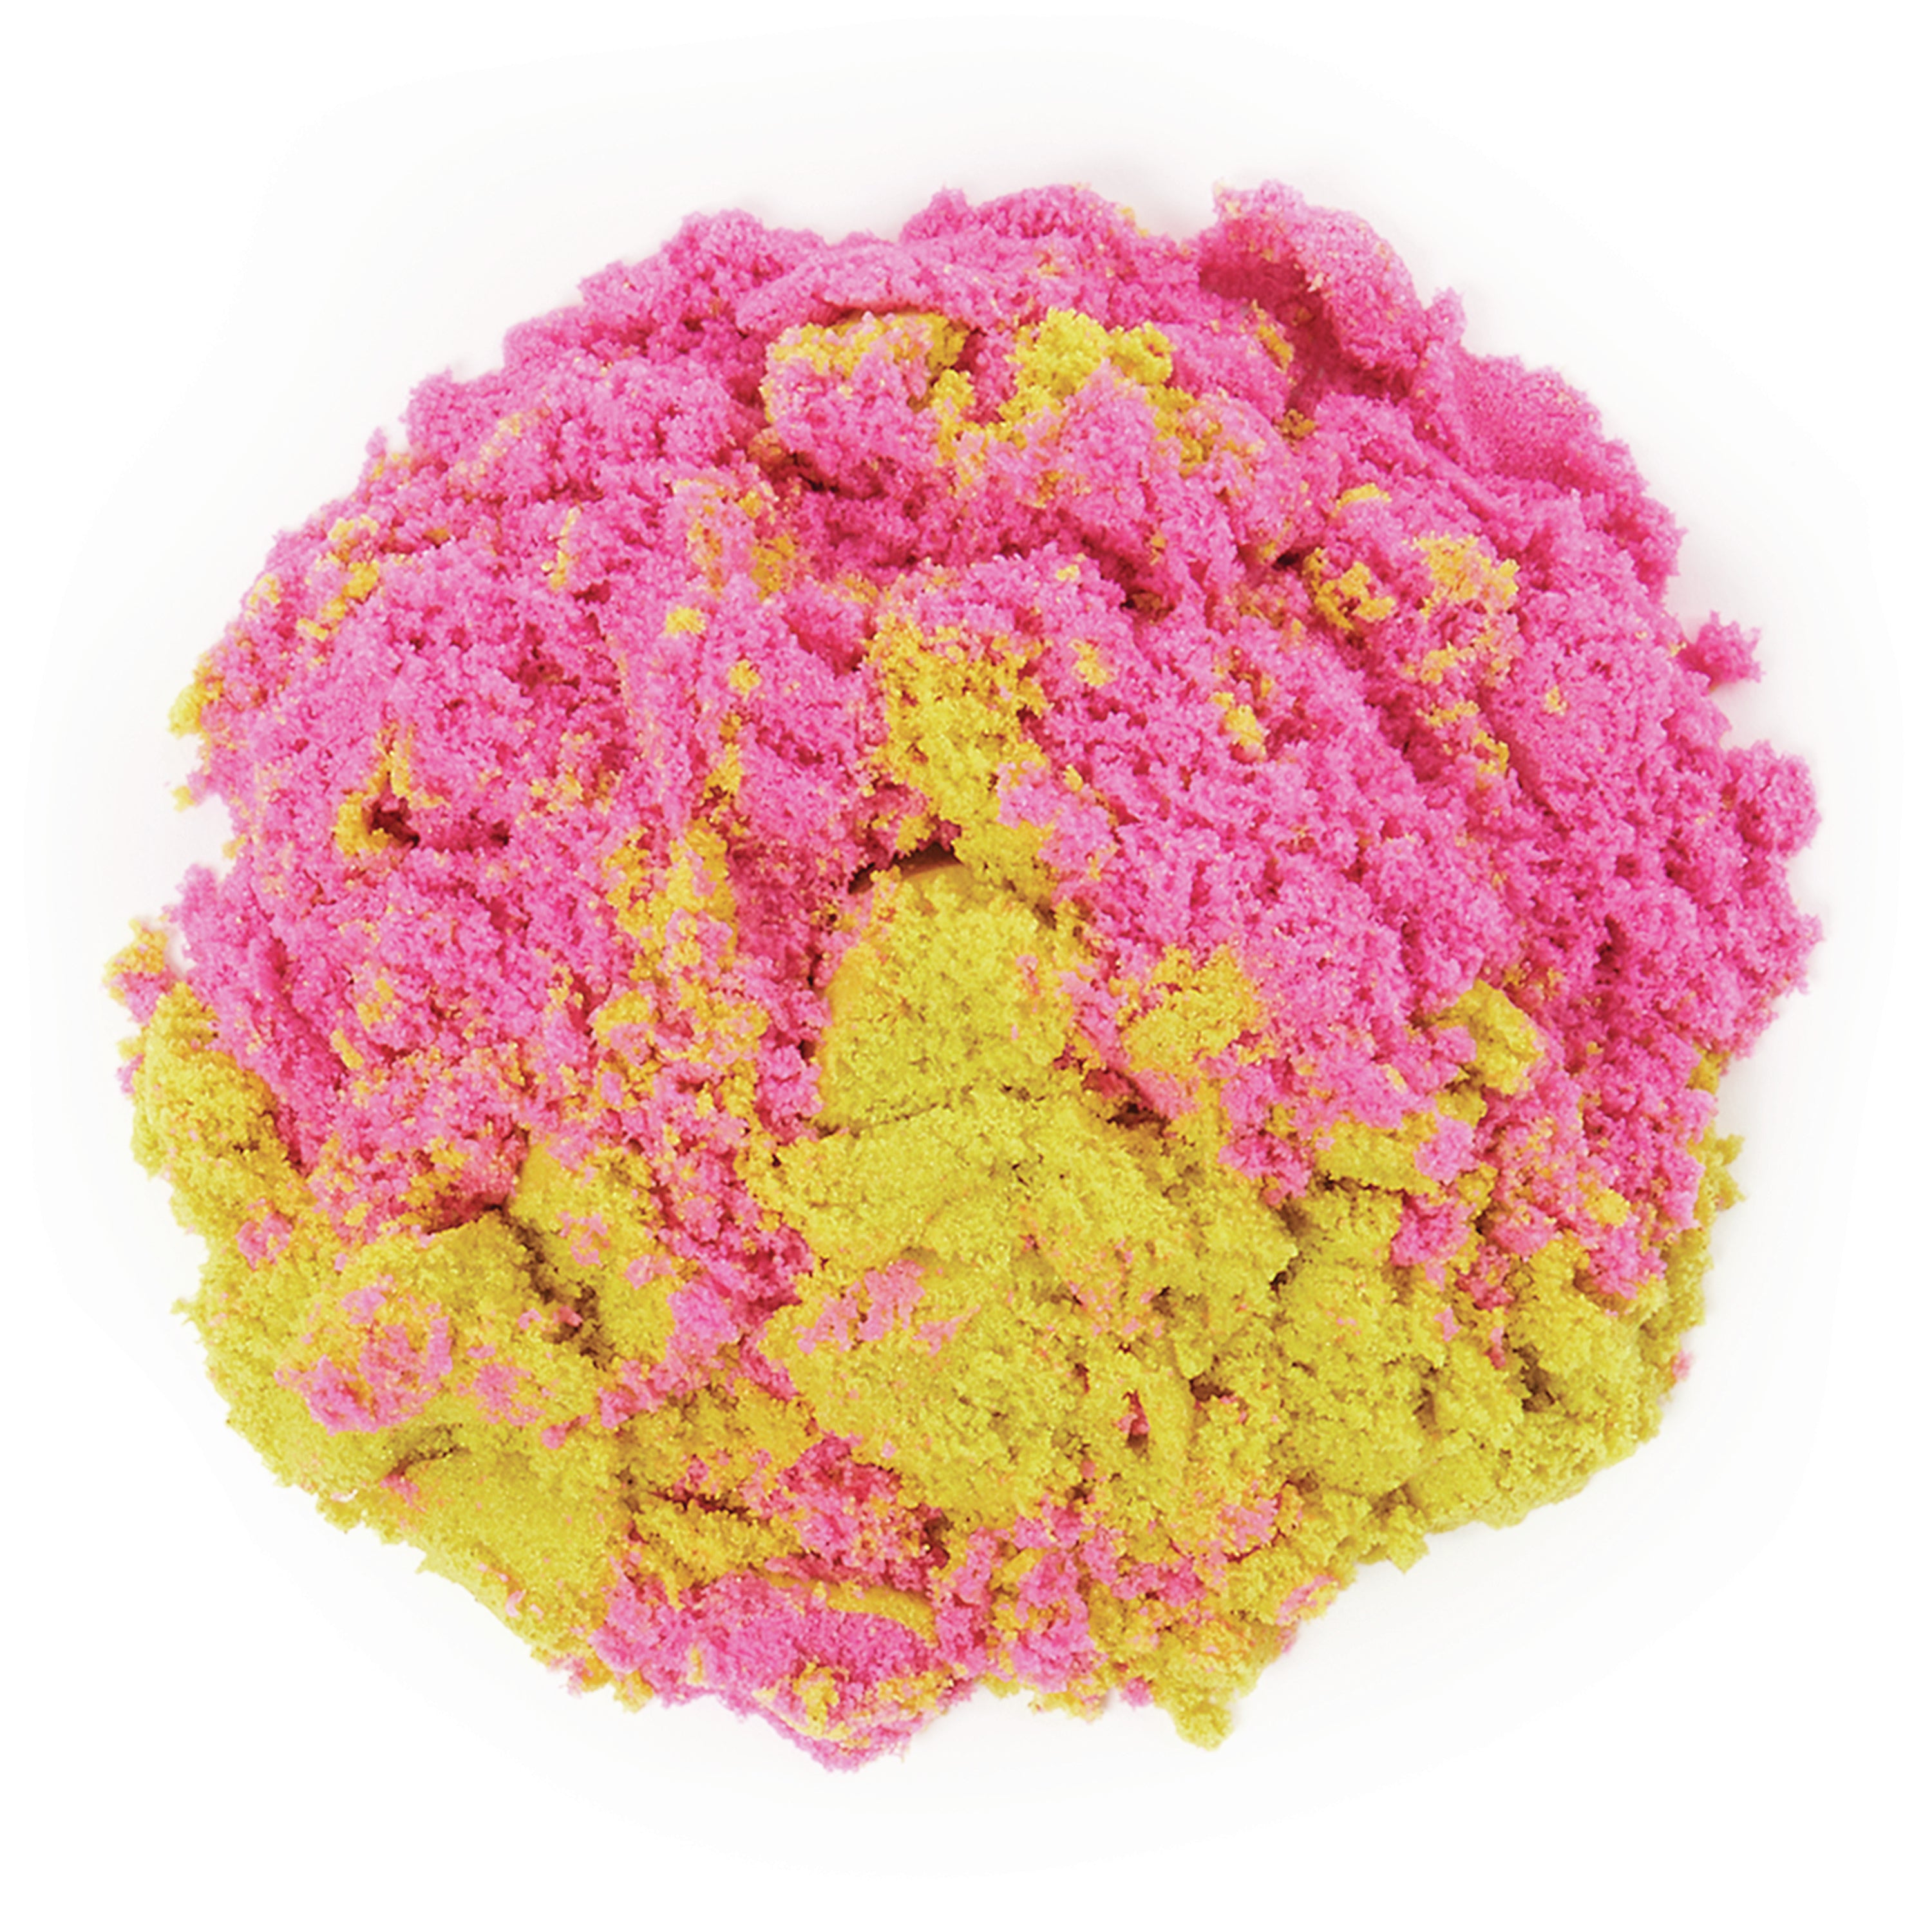 SPIN MASTER - KINETIC SAND Scents - Ice Cream Cones - Random Color - Age: +3